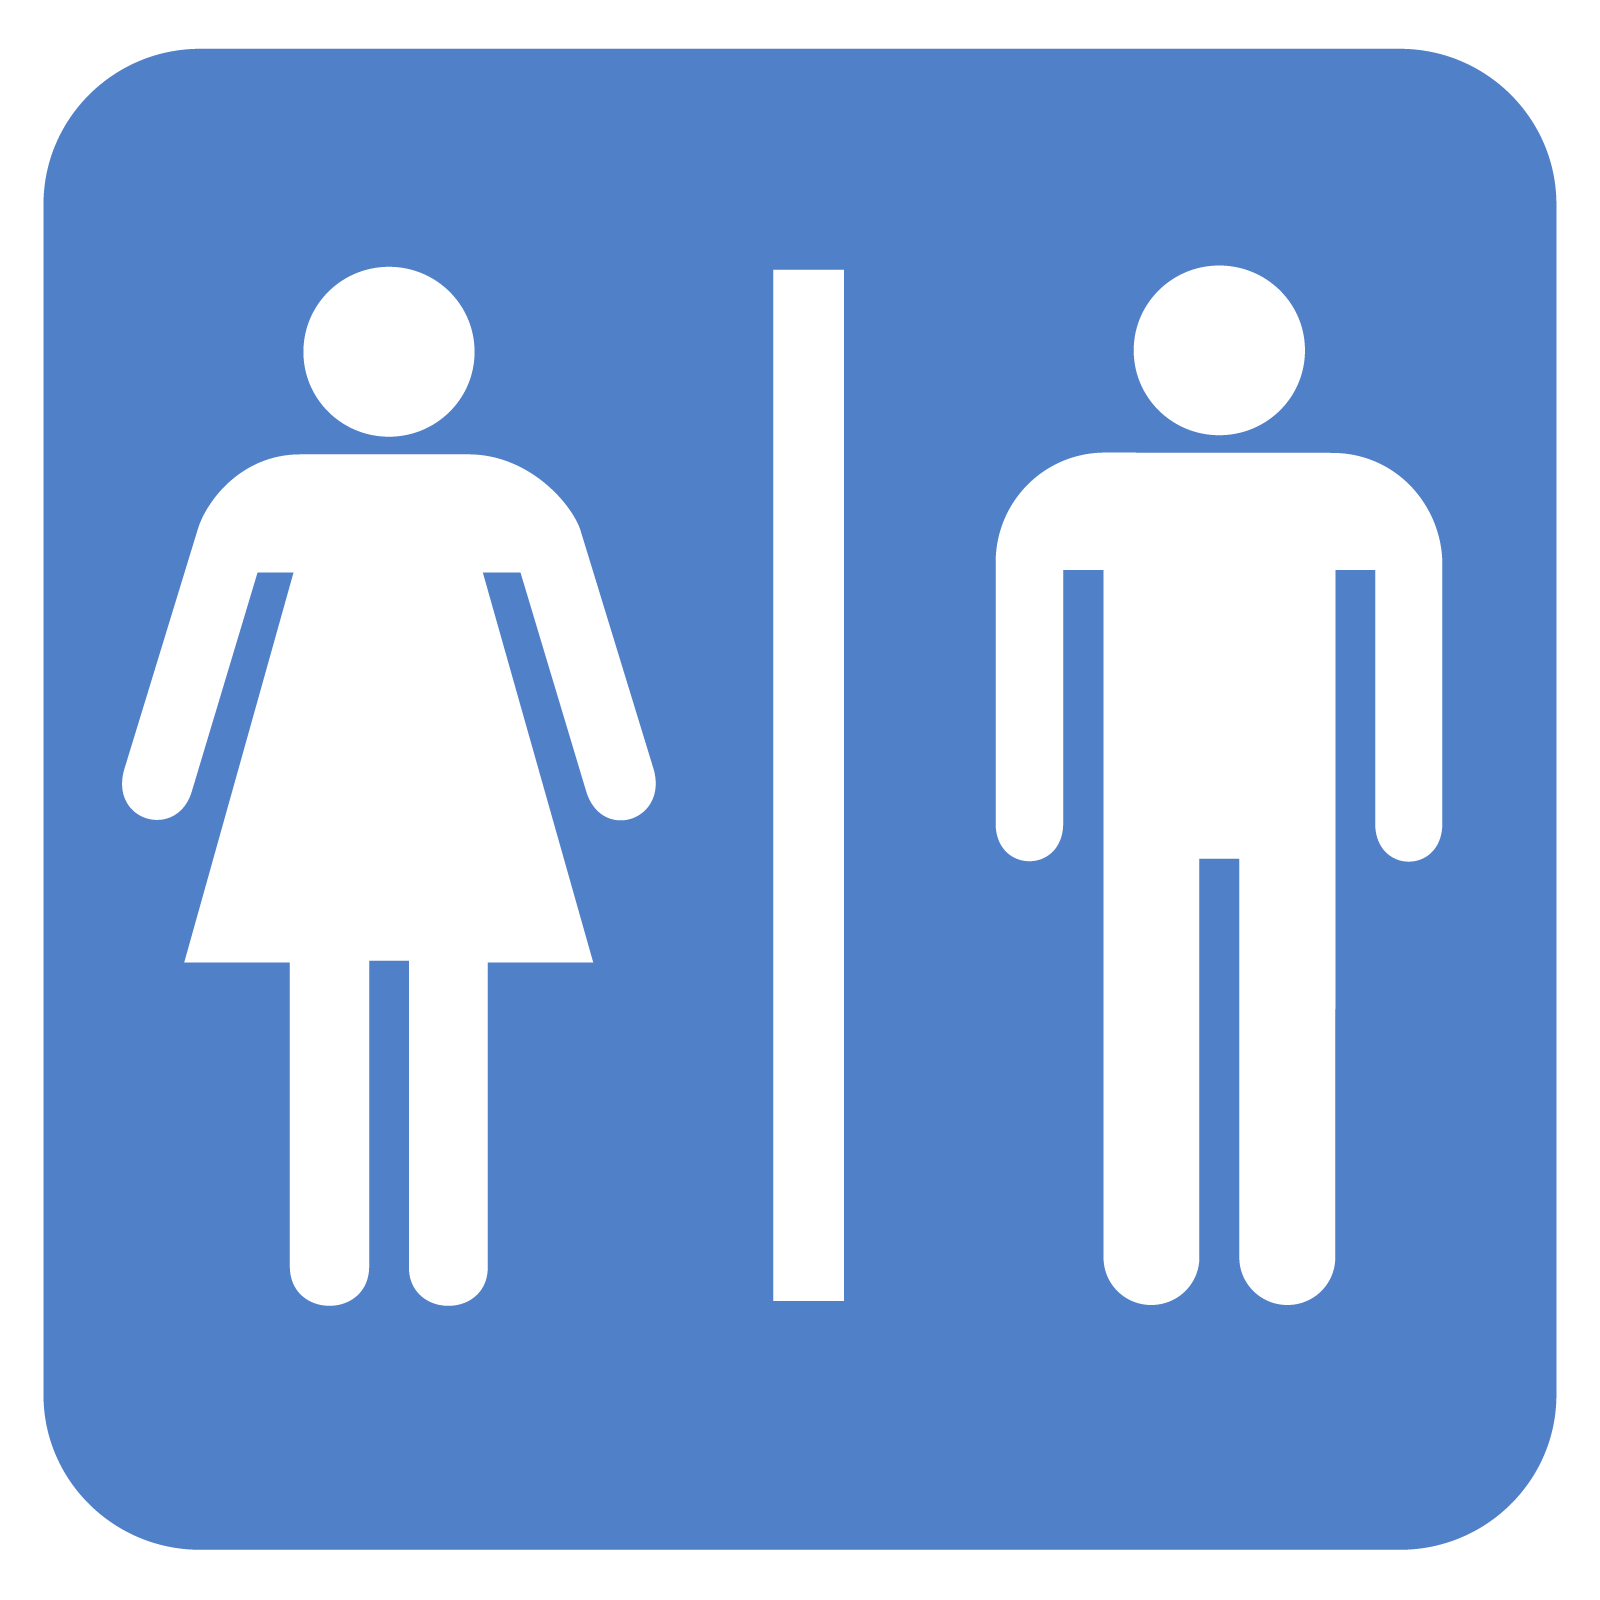 Ladies Bathroom Sign | Free Download Clip Art | Free Clip Art | on ...